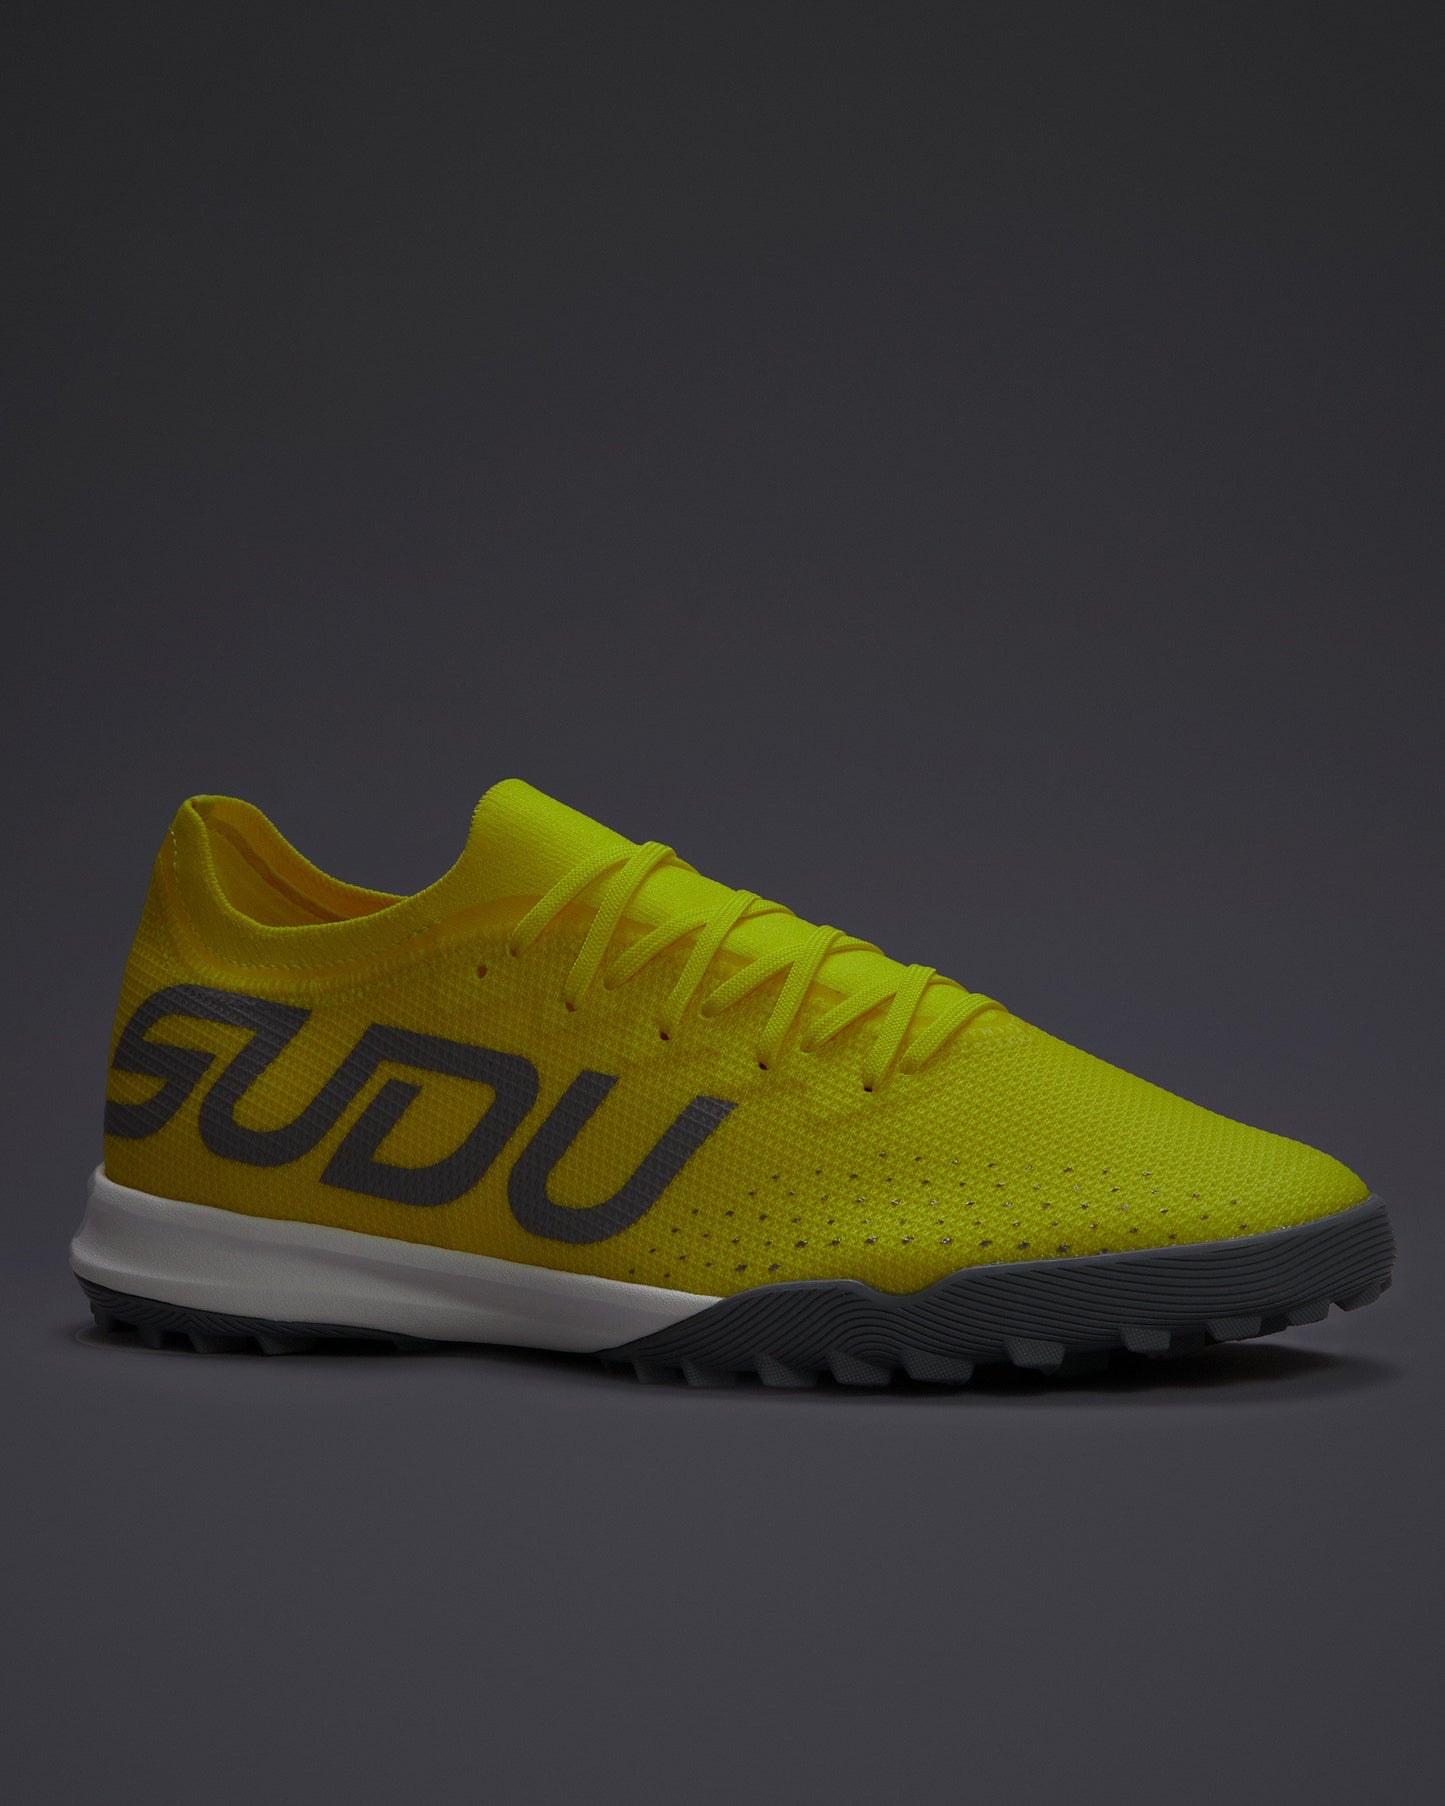 SUDU SFS TT 01 Turf - Yellow UK 6 Astroturf Shoe